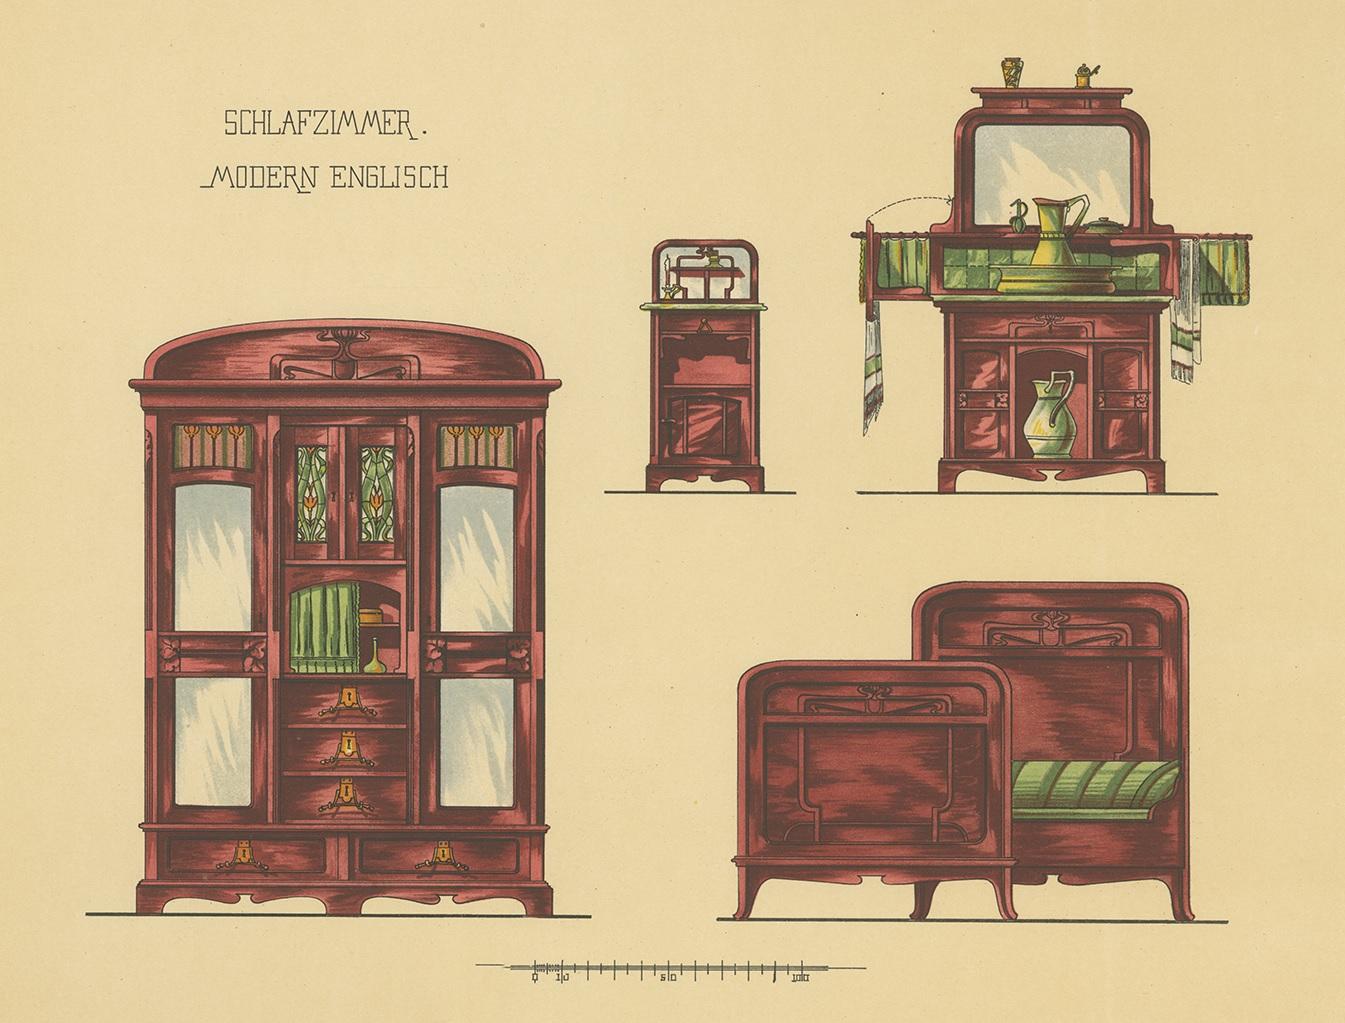 Antique print titled 'Schlafzimmer modern Englisch'. Lithograph of bedroom furniture. This print originates from 'Det Moderna Hemmet' by Johannes Kramer. Published by Ferdinand Hey'l, circa 1910.